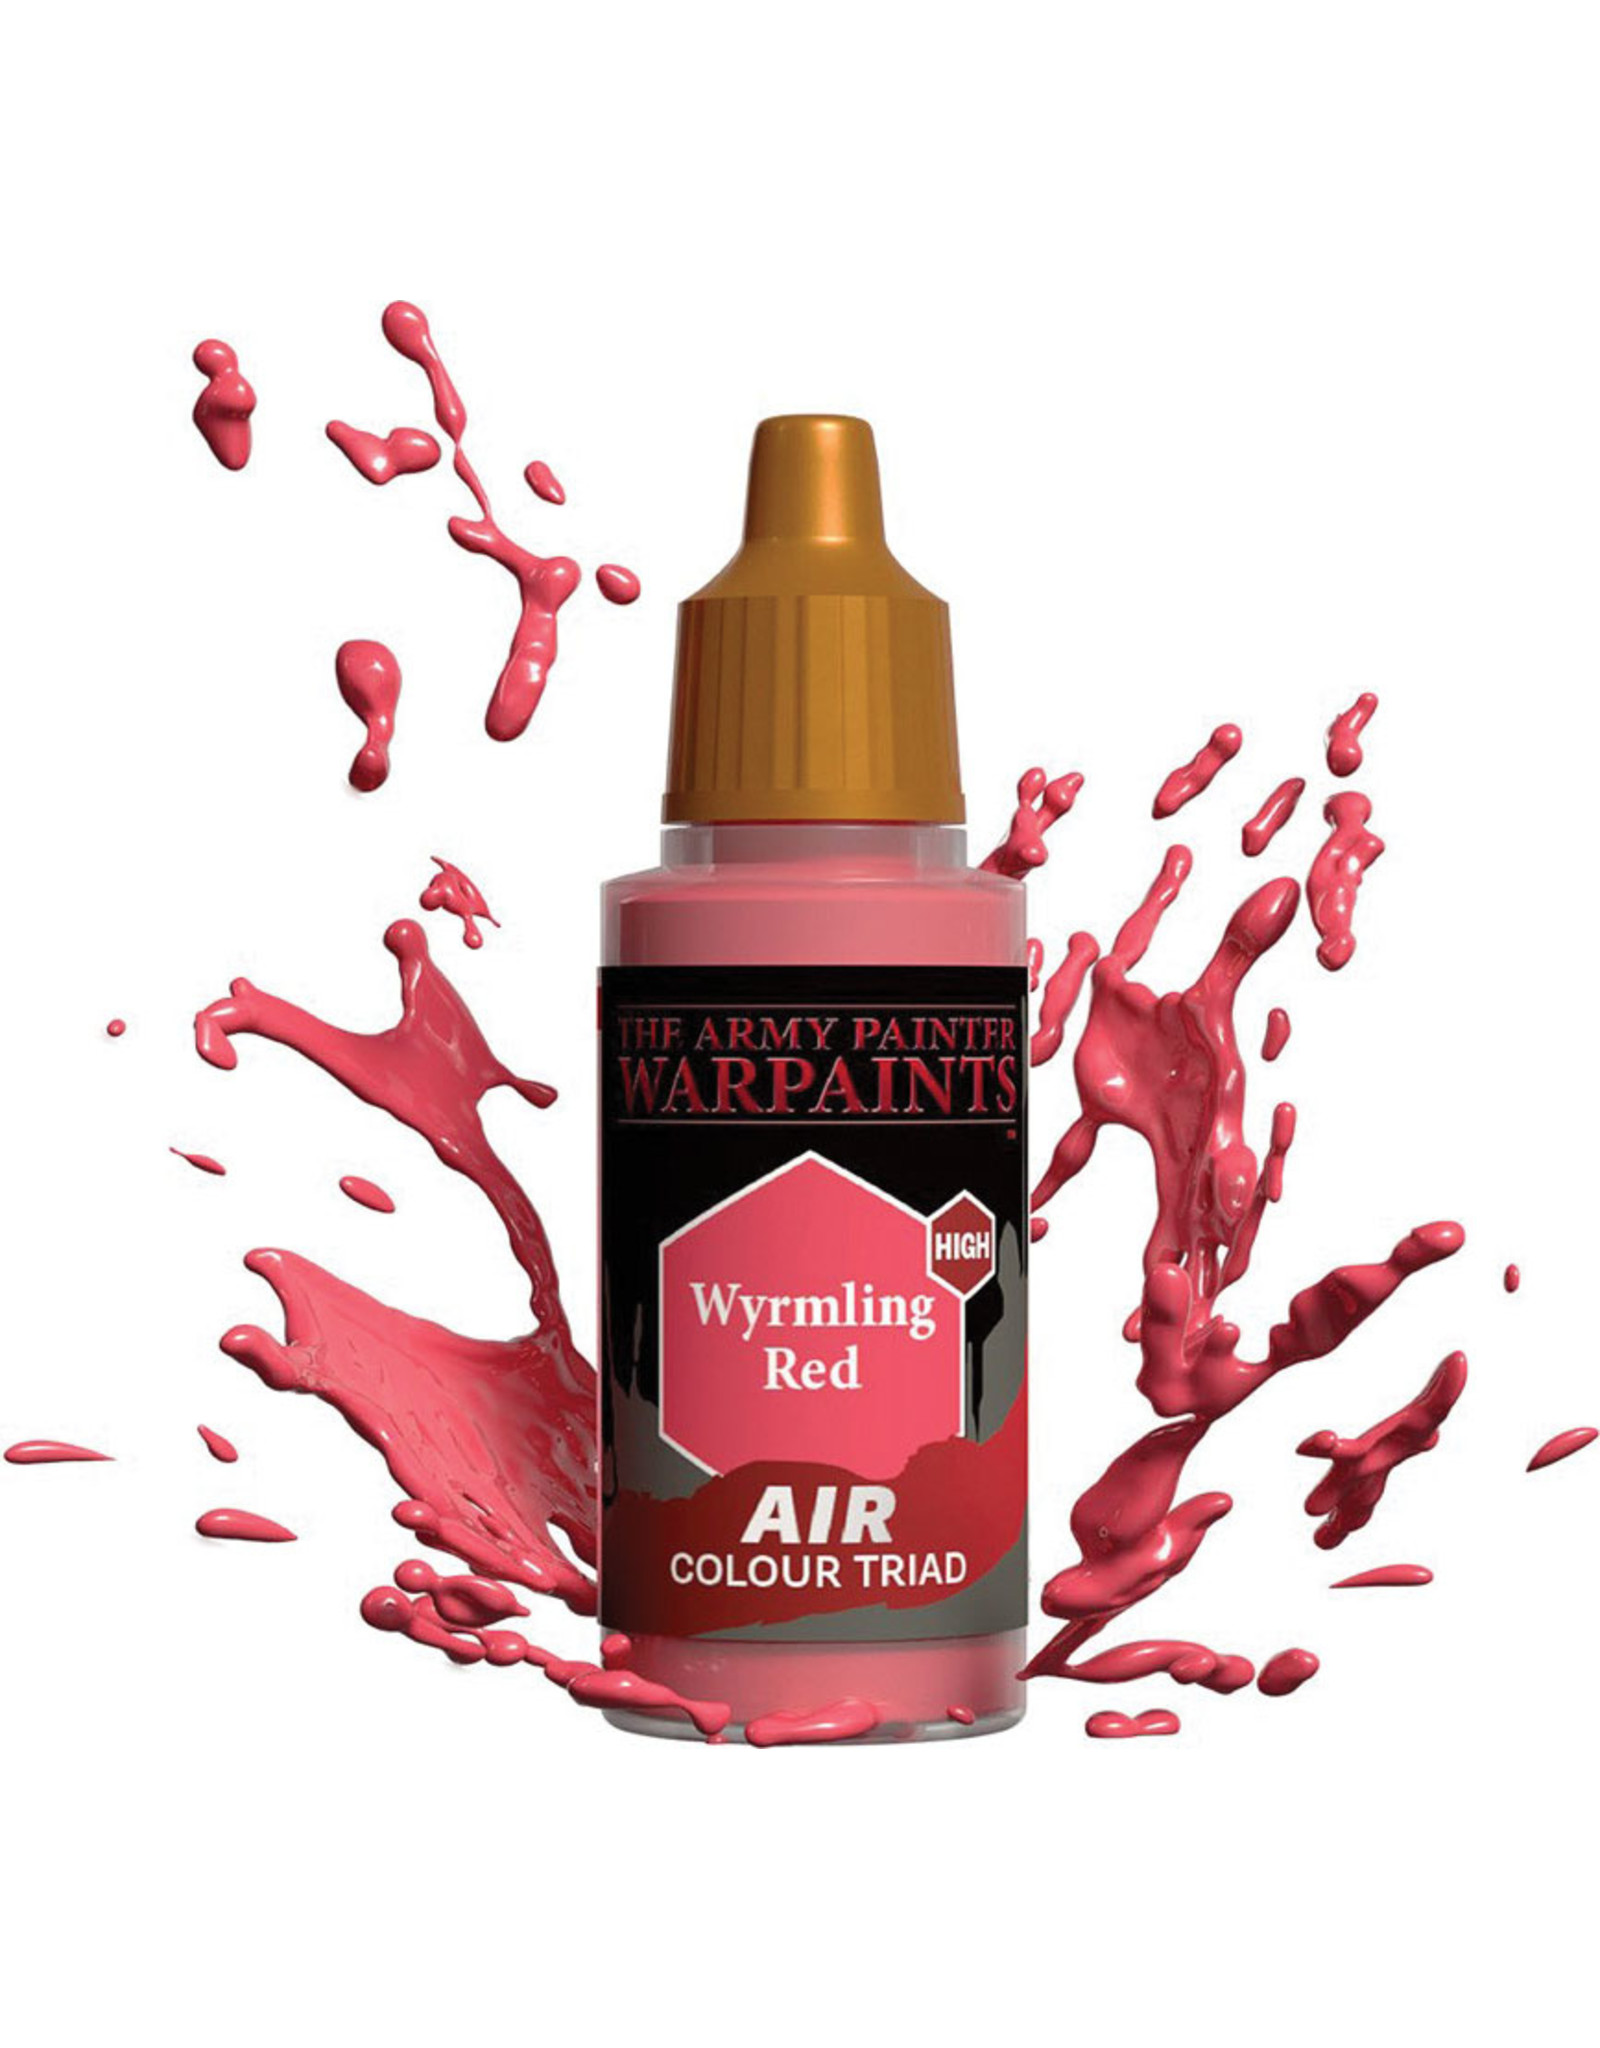 Army Painter Warpaint Air: Wyrmling Red, 18ml.